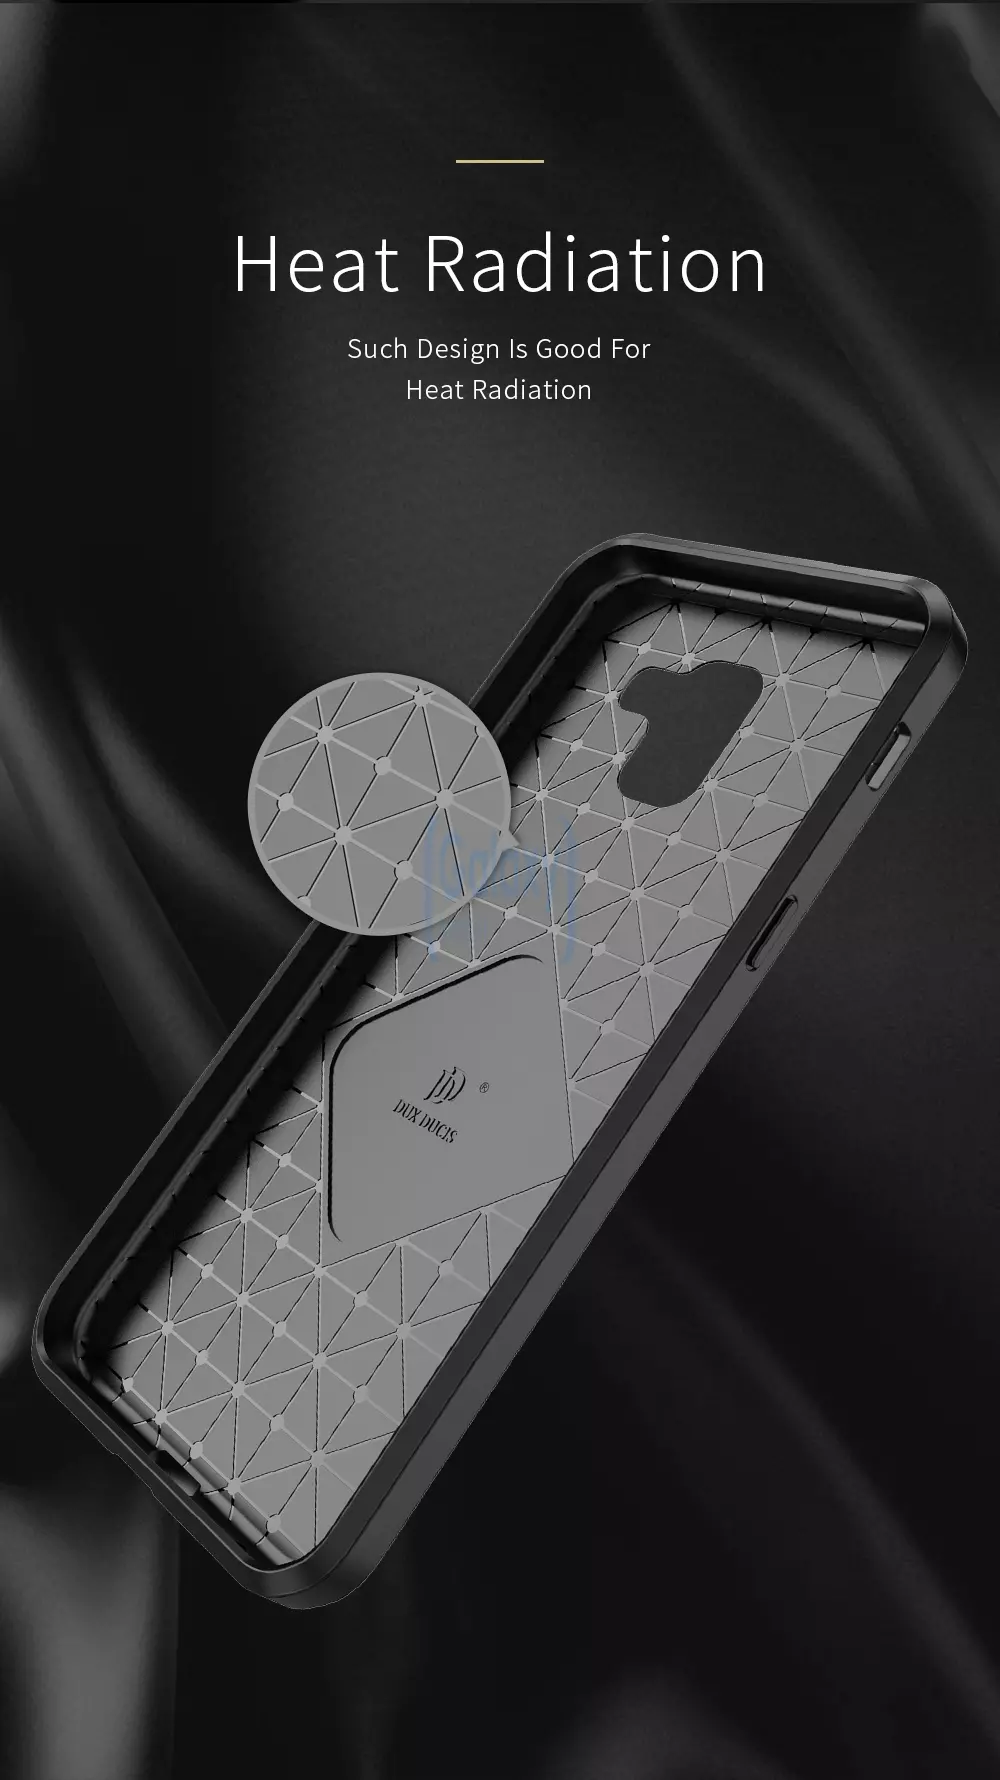 Чехол бампер Dux Ducis Carbon Magnetic Case для Samsung Galaxy J6 2018 Navy Blue (Синий)